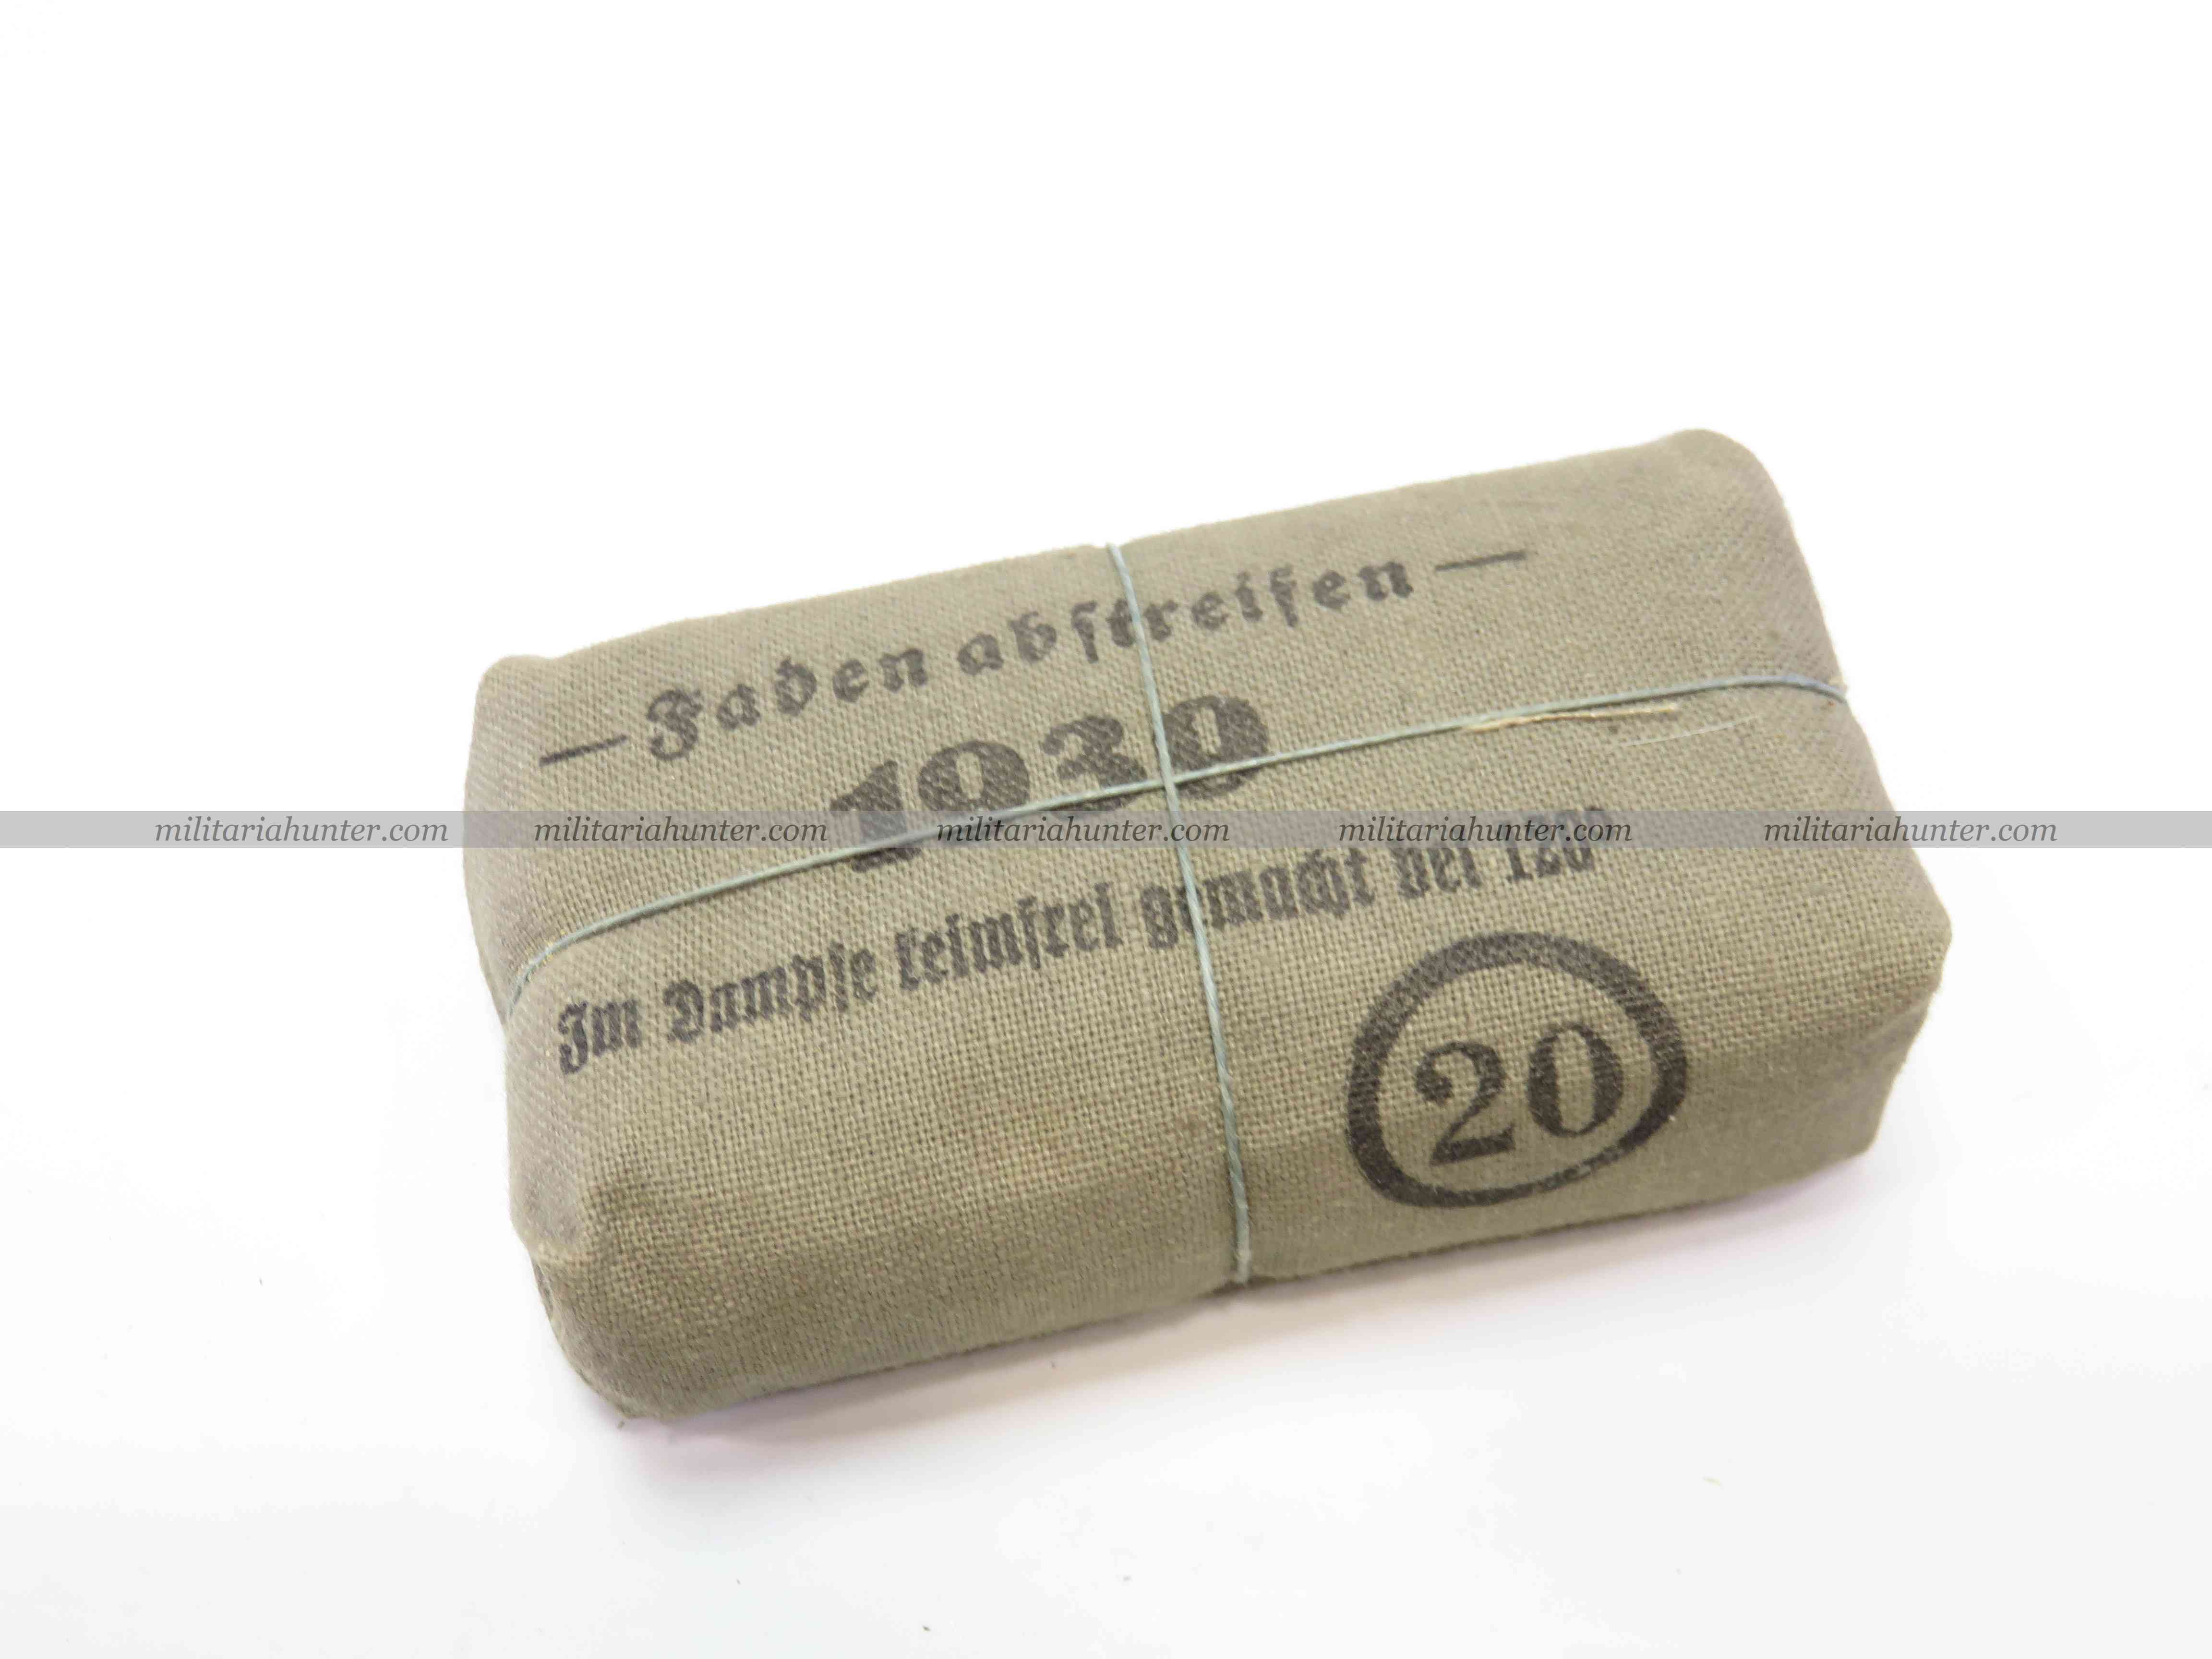 militaria : WW2 german field medical dressing - 1939 - pansement allemand